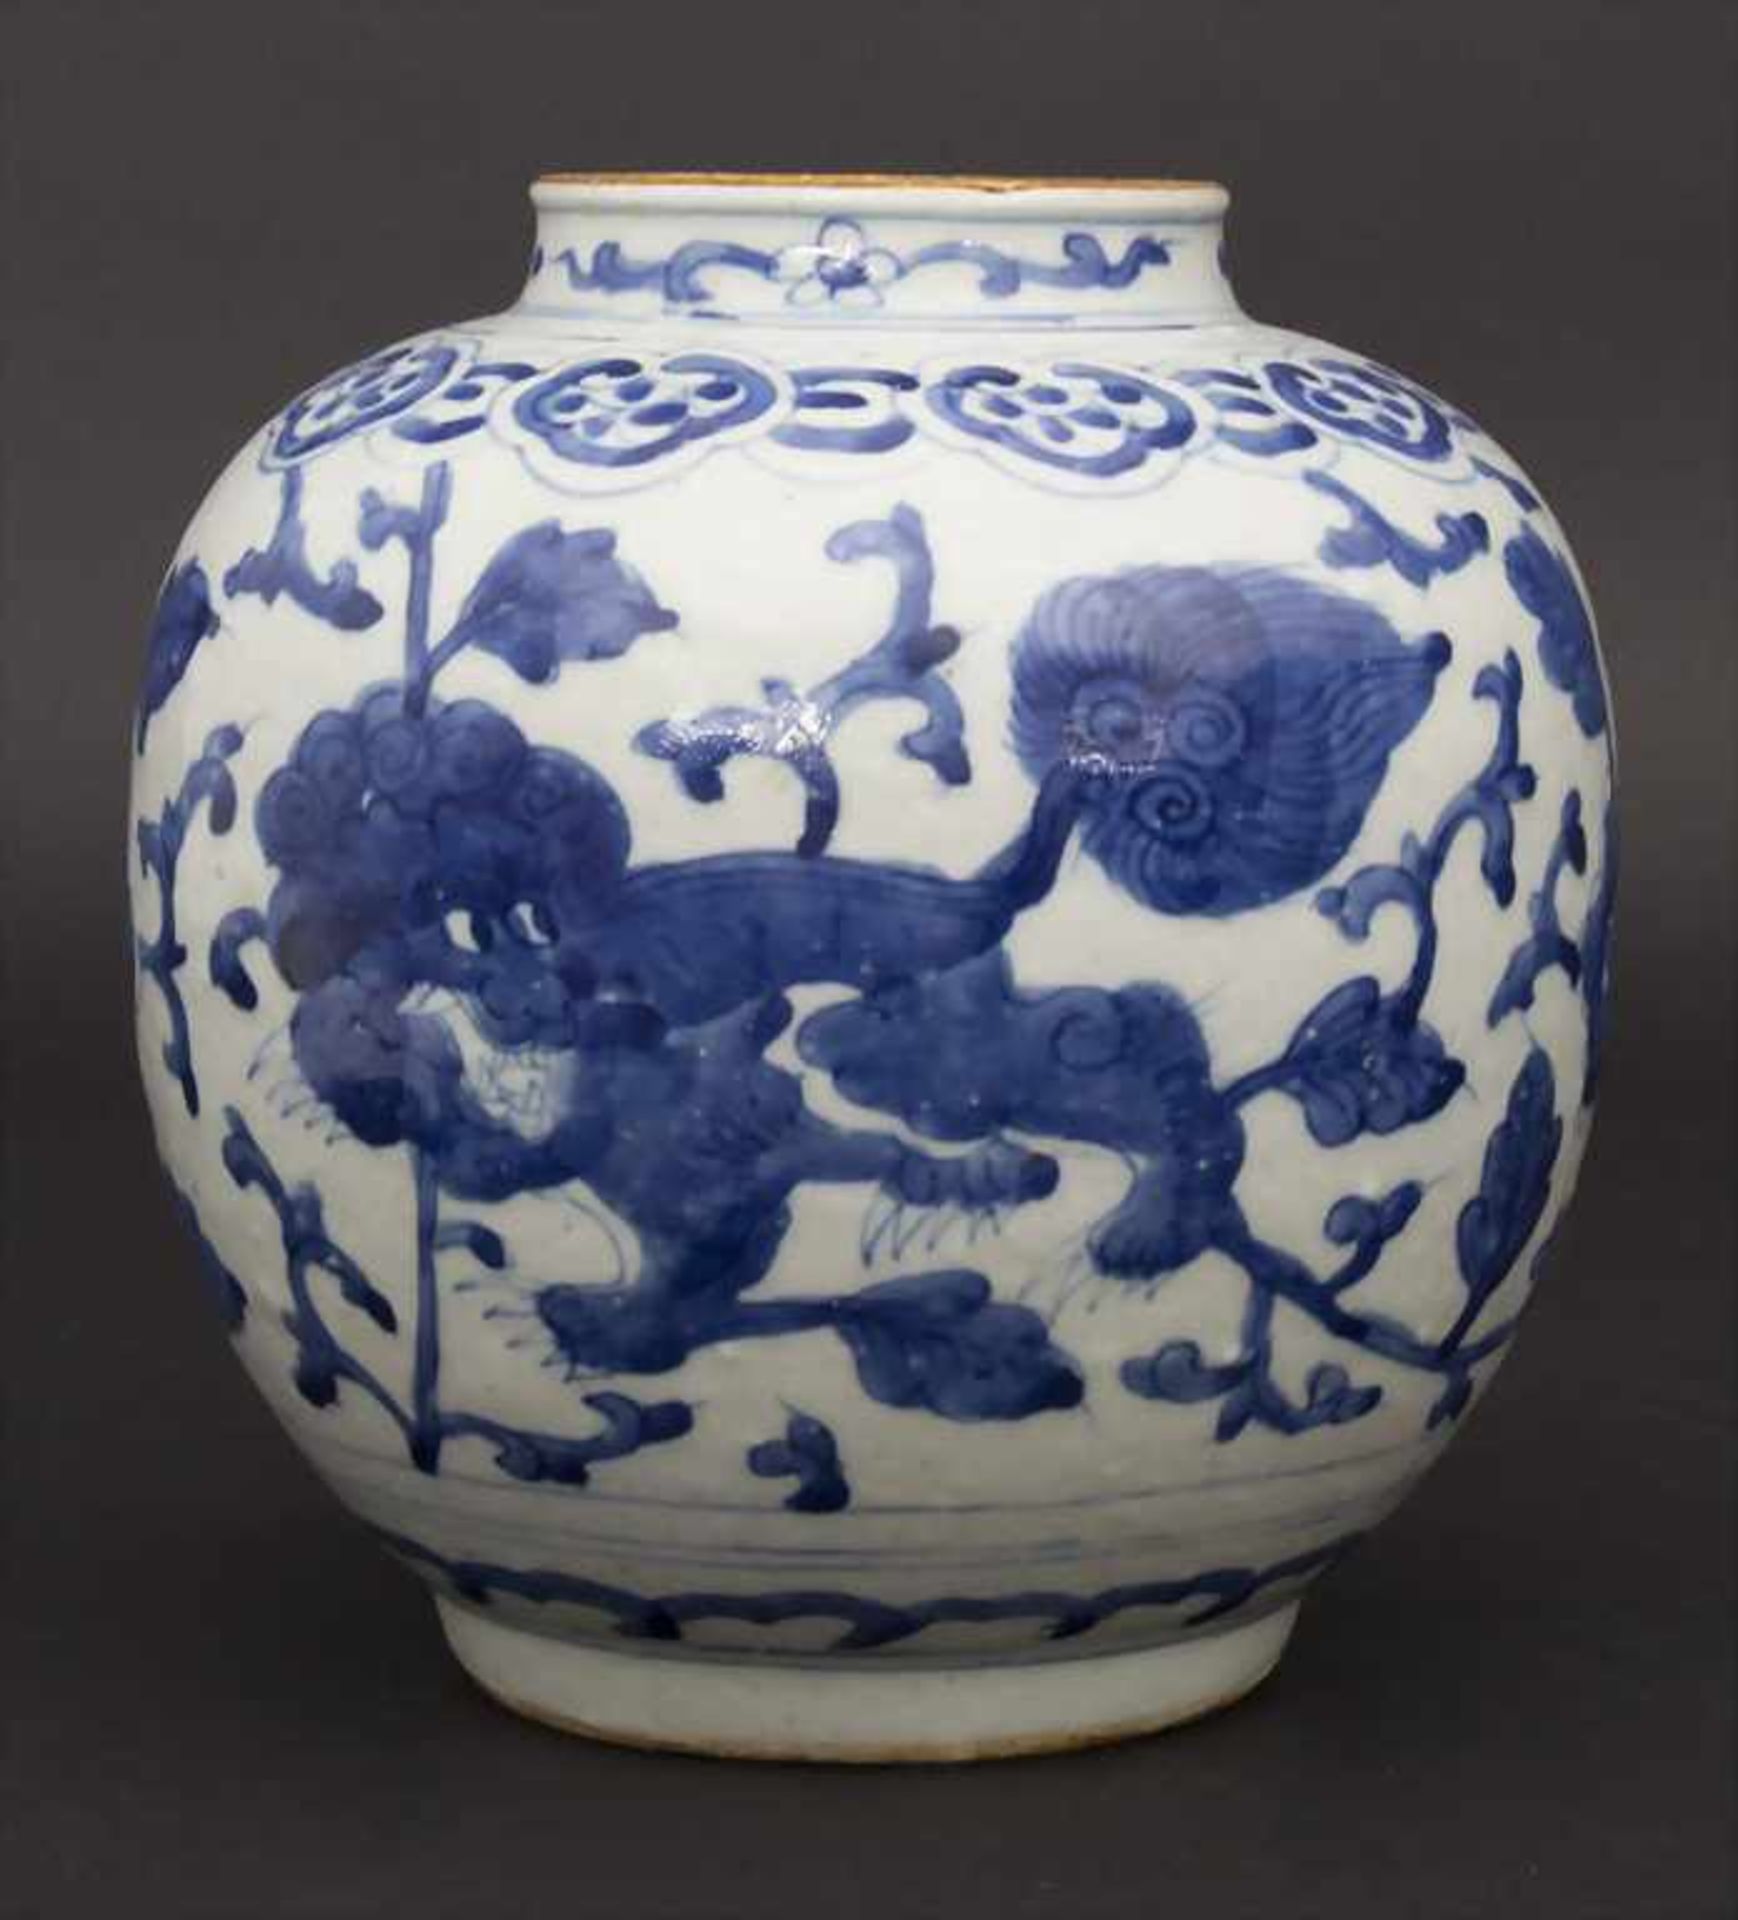 Schultertopf mit unterglasurblauer Malerei, Qing Dynastie, China, 18./19. Jh. - Image 4 of 11